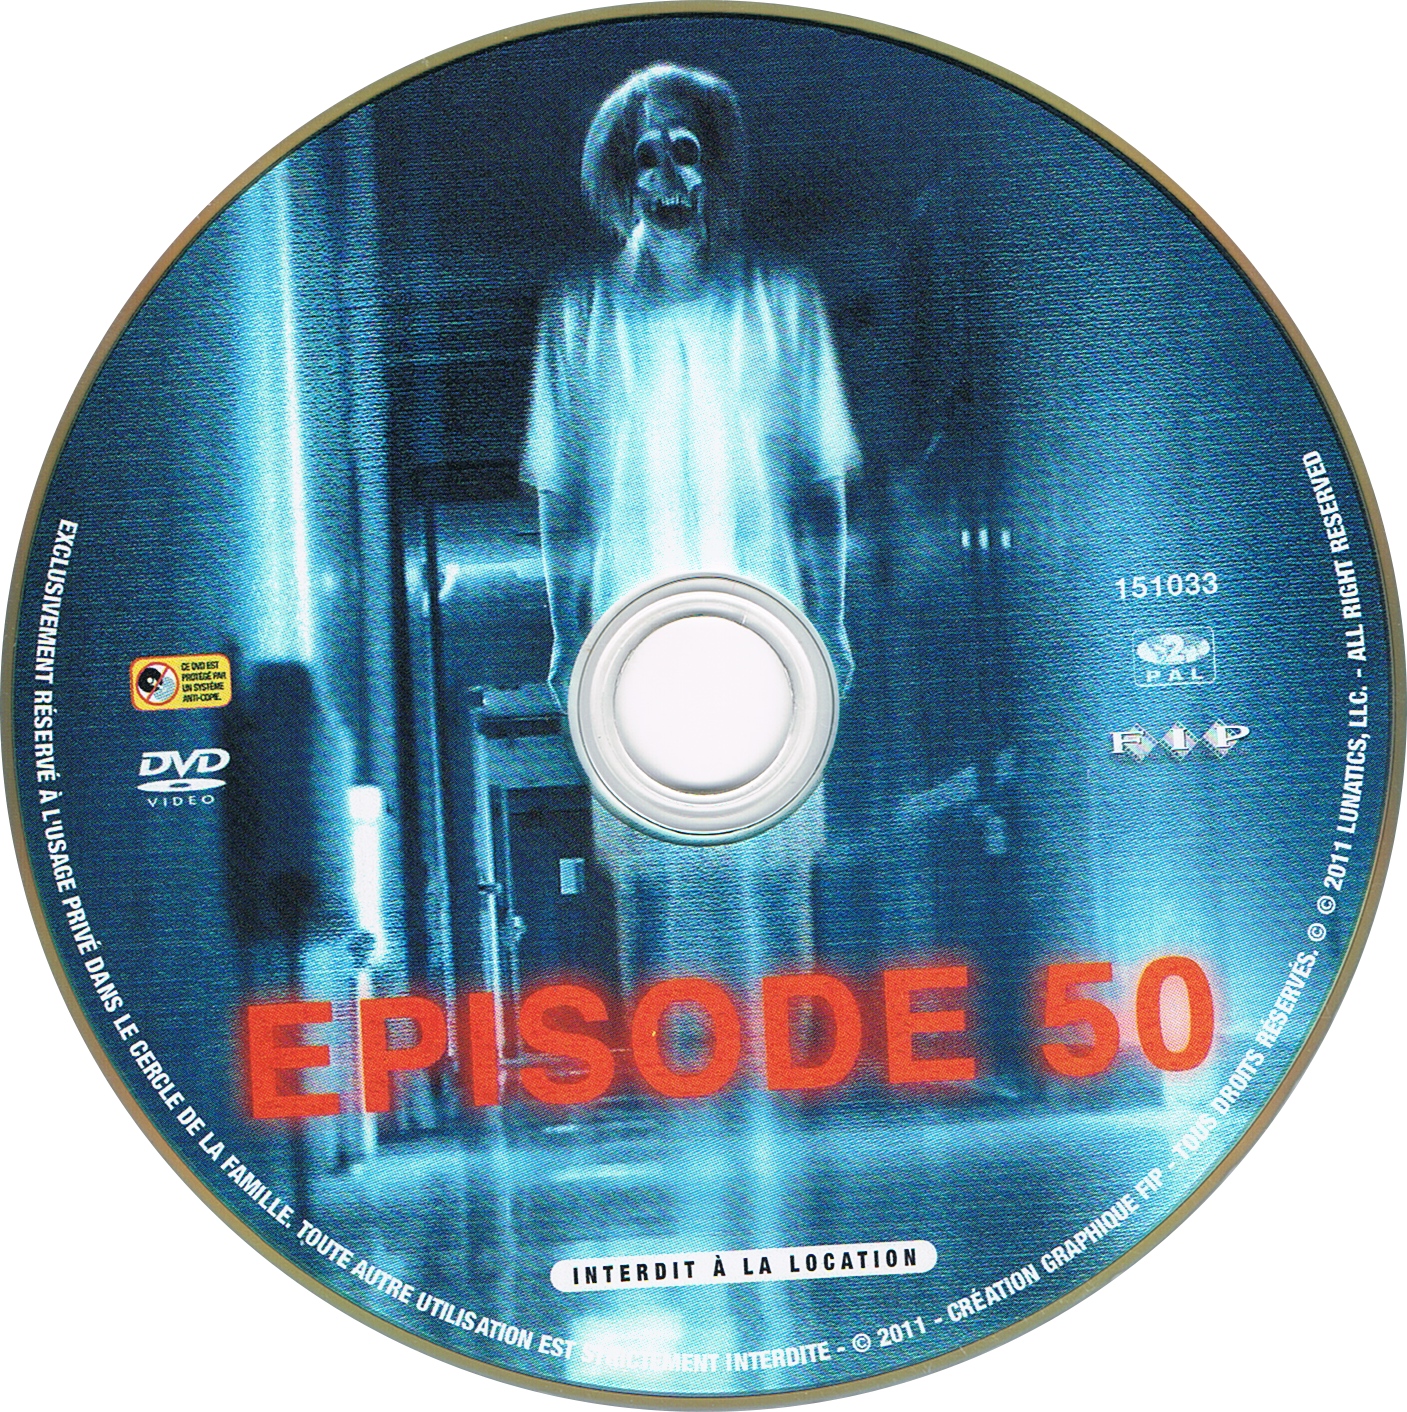 Episode 50